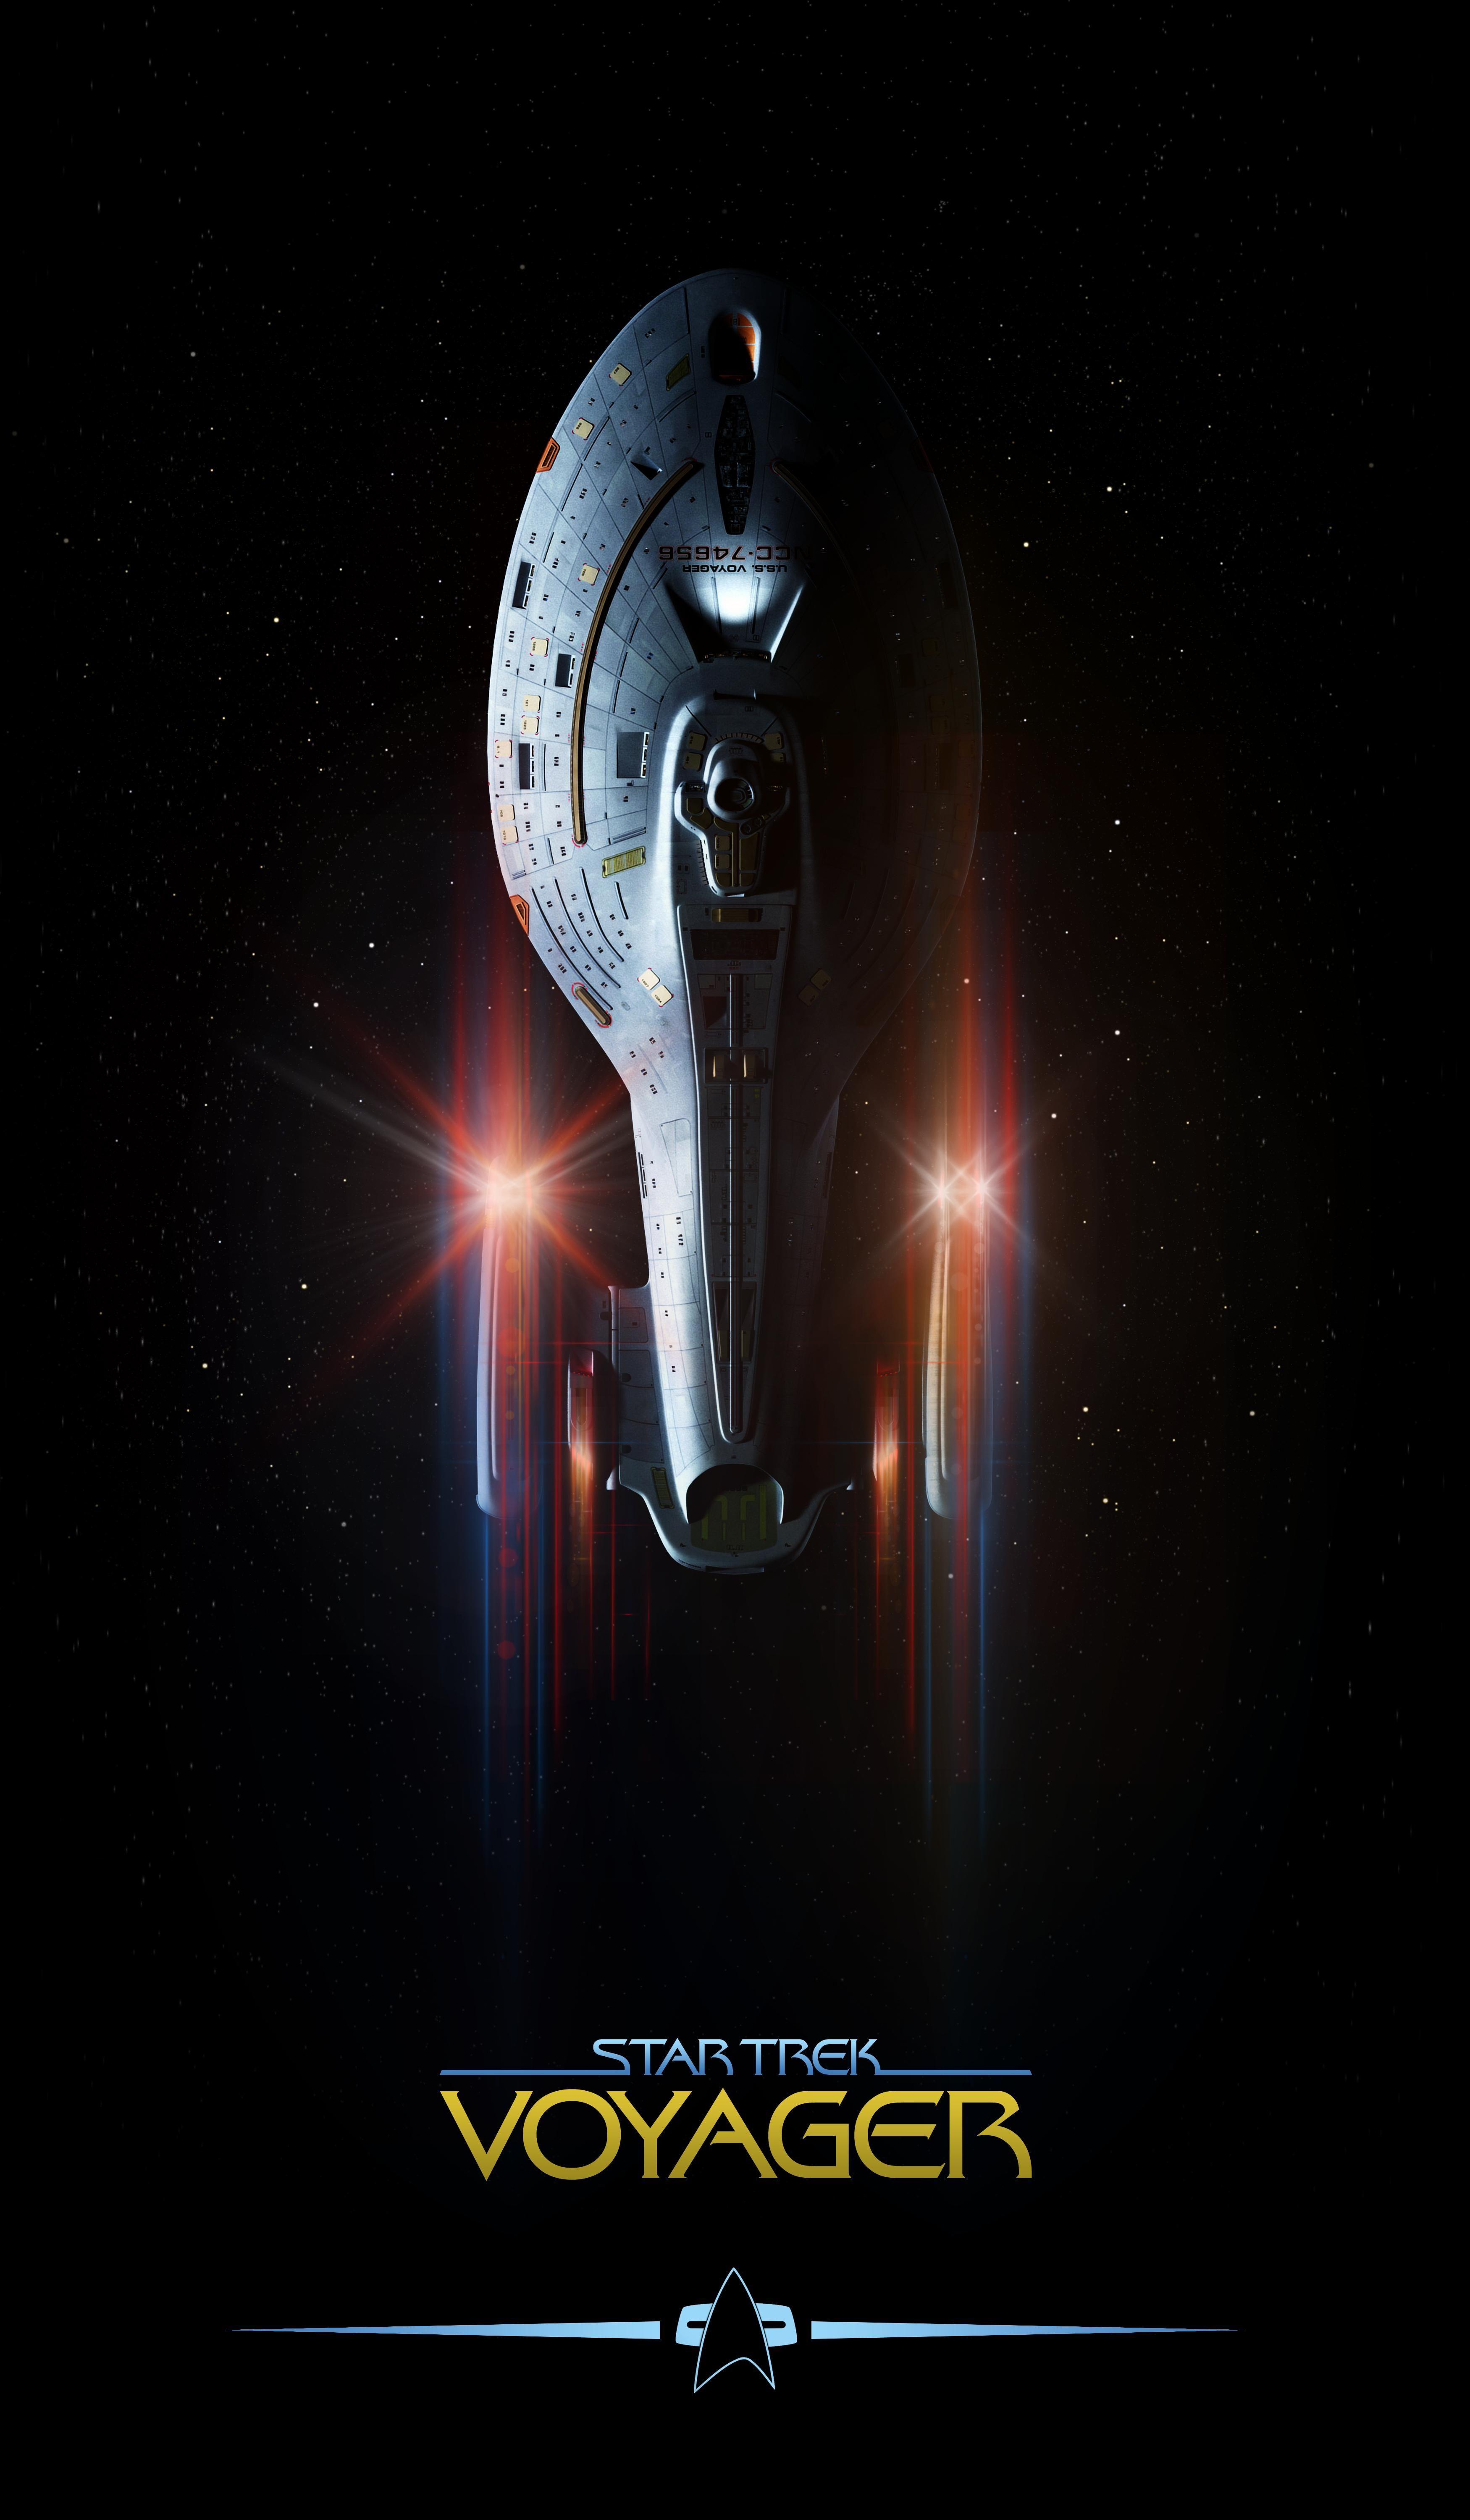 Voyager, By Lewis Niven Trek Voyager Retro Poster